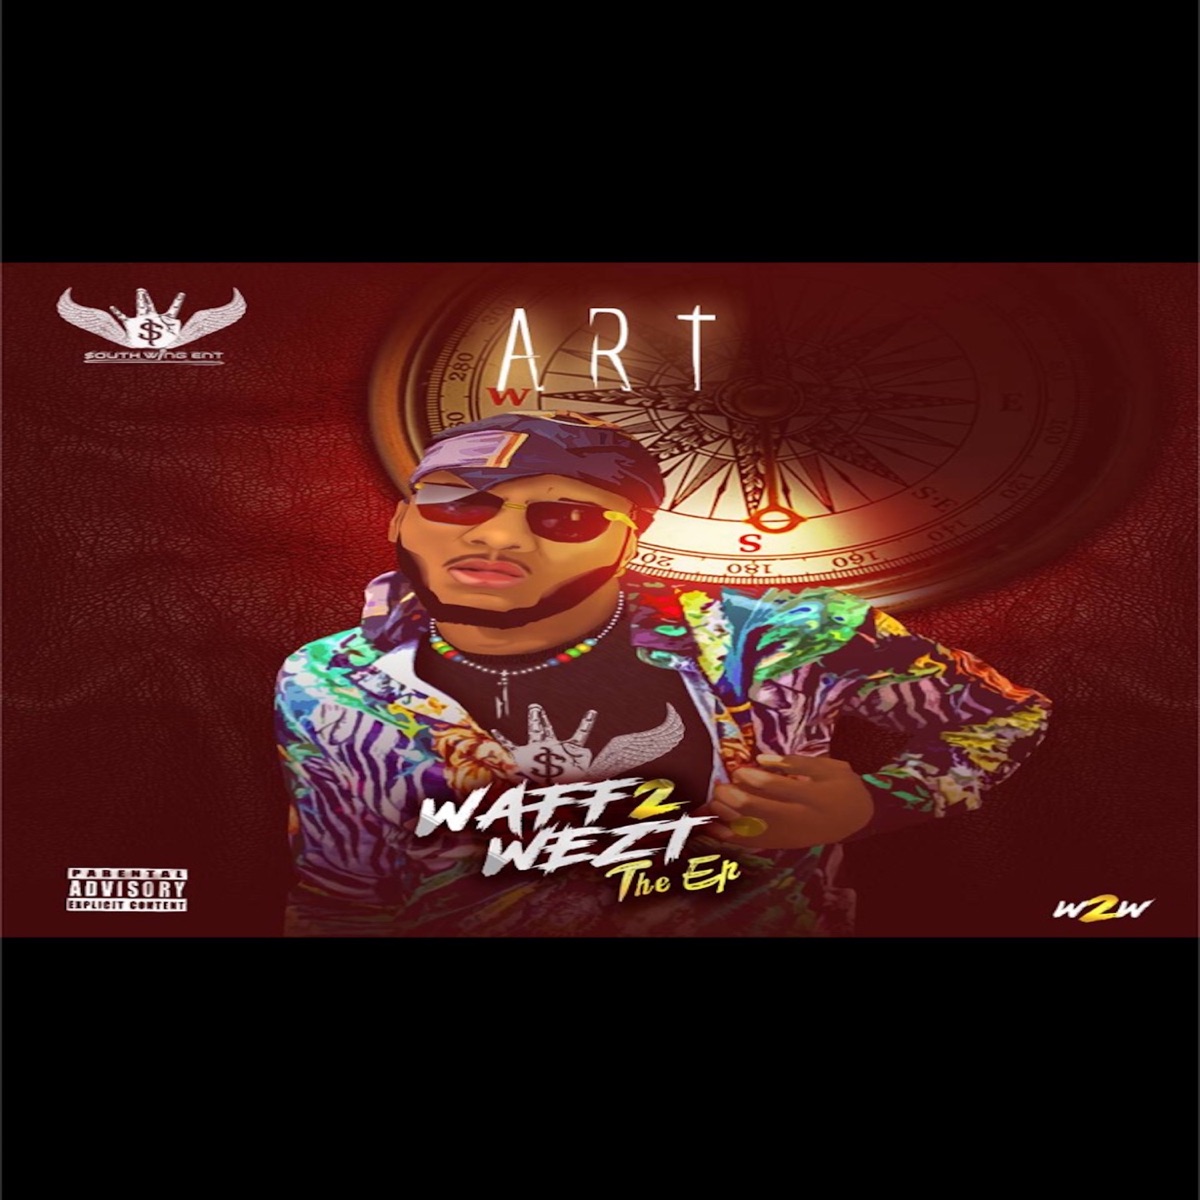 Waff2wezt Album Cover By Art